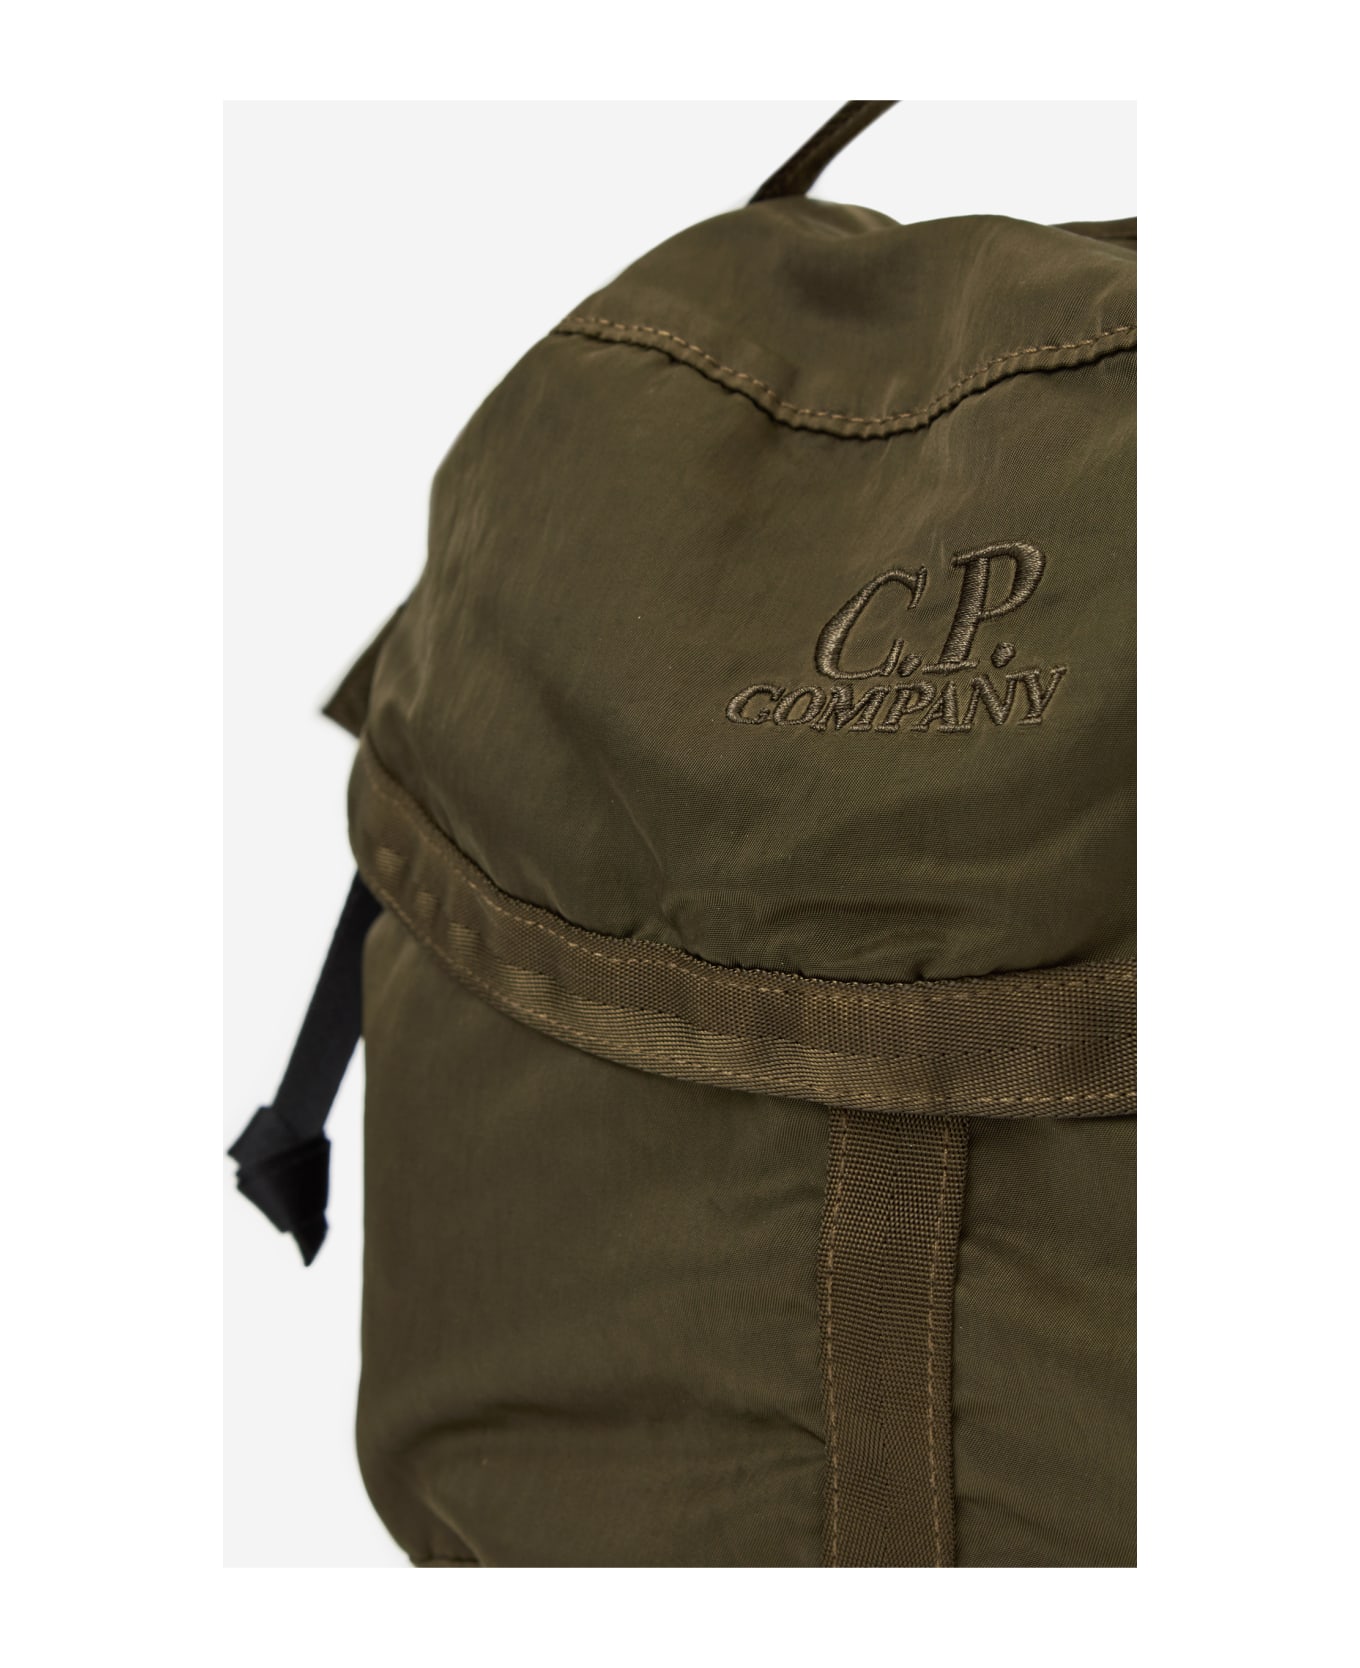 C.P. Company Bag - Ivy Green